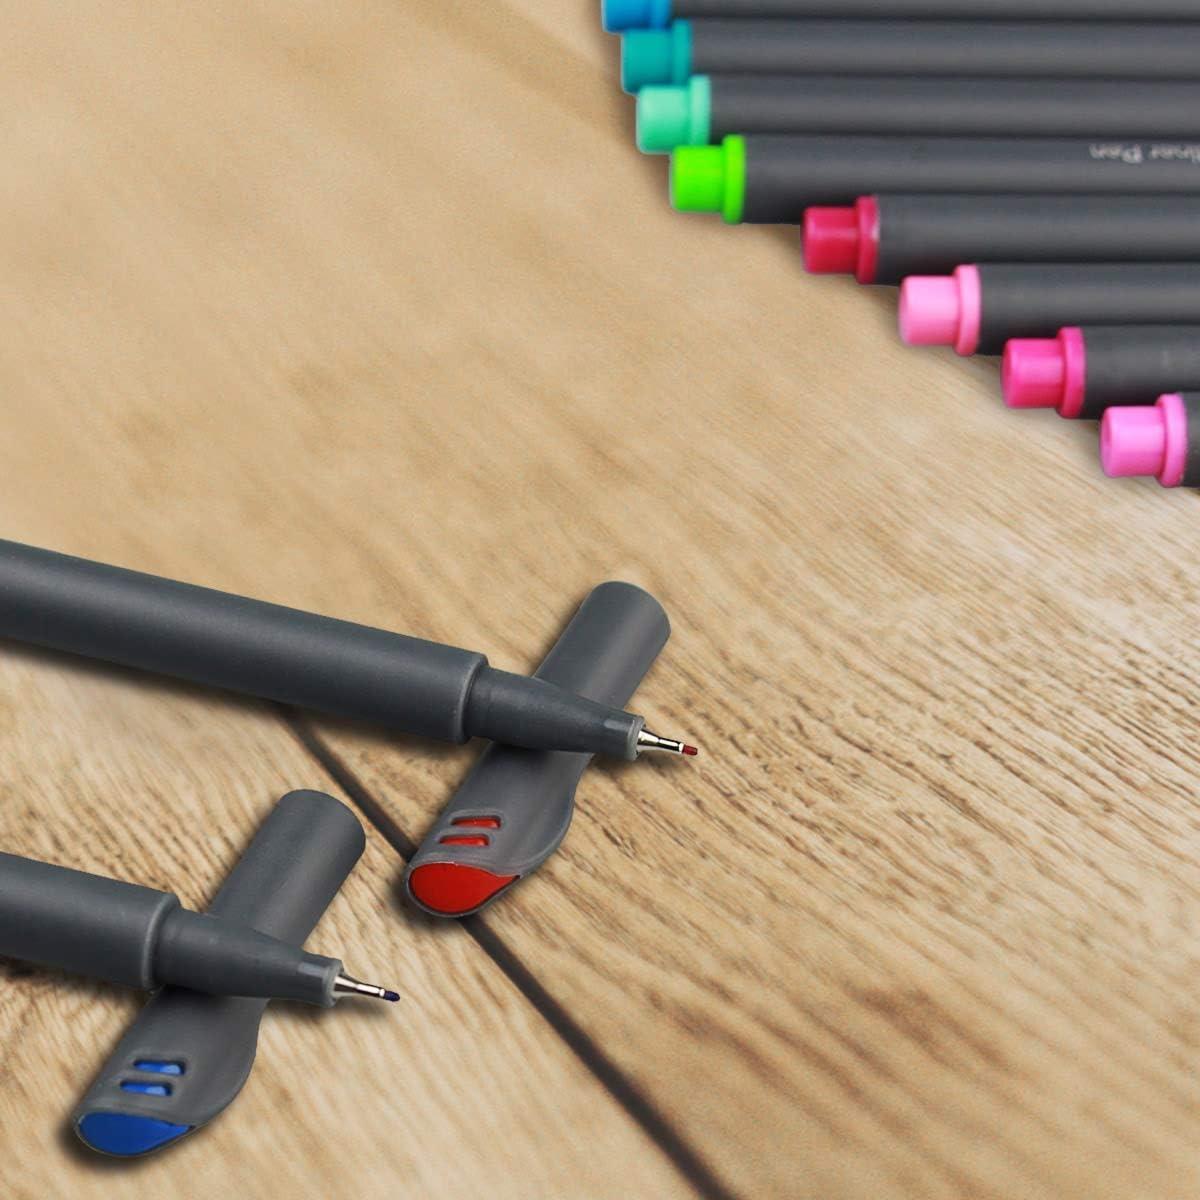 24 Fineliner Color Pens Set, Taotree Fine Line Colored Sketch Writing Drawing Pens